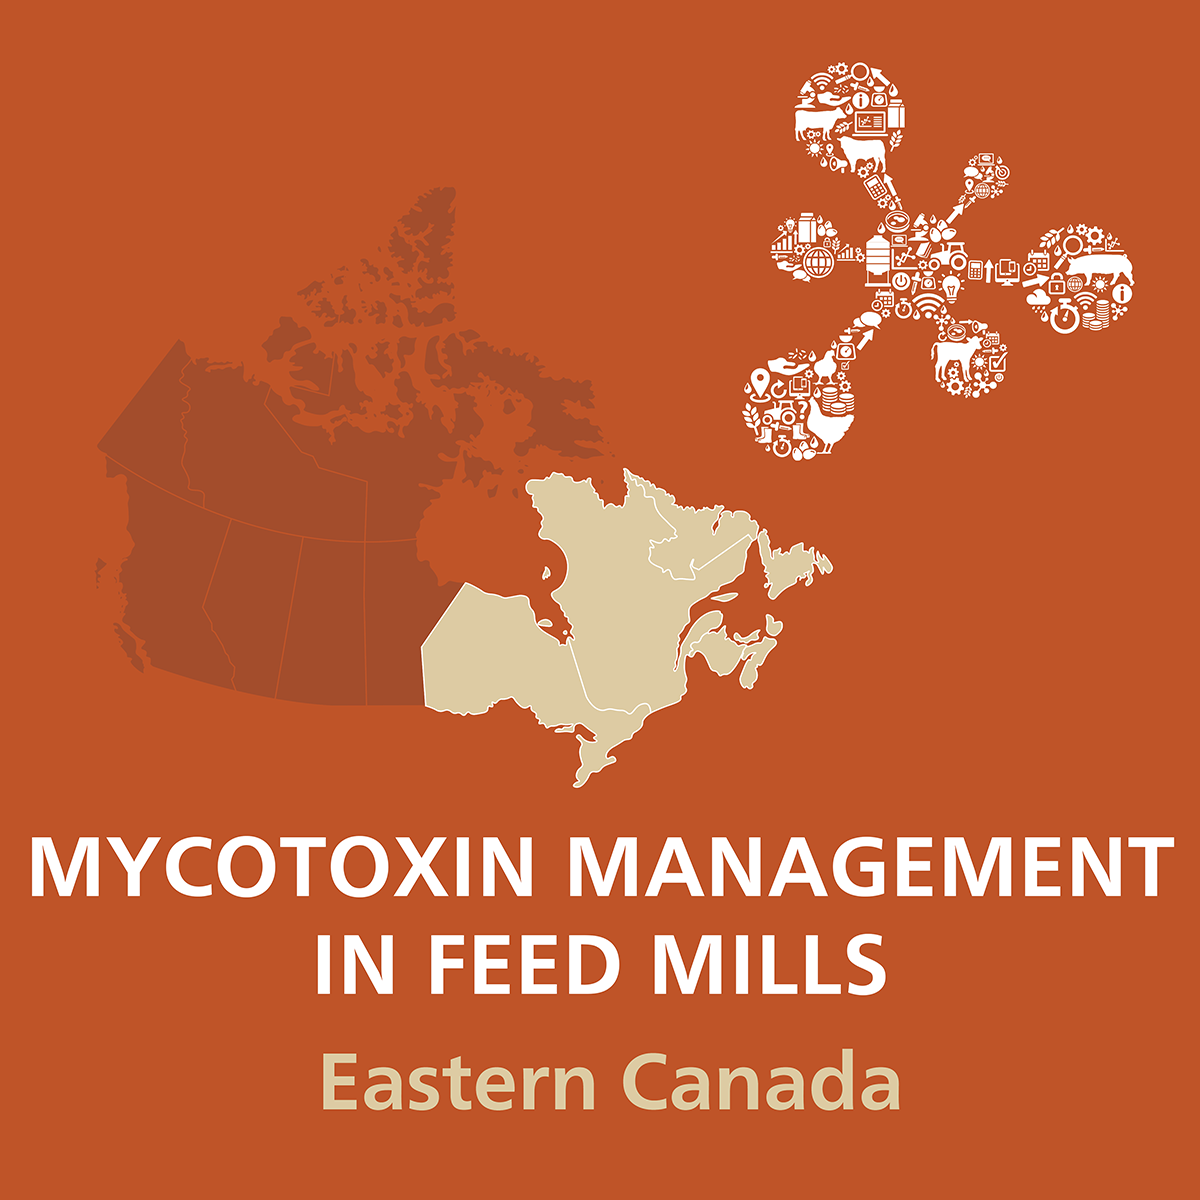 MycotoxinManagermentFeedMills-Eastern-Canada